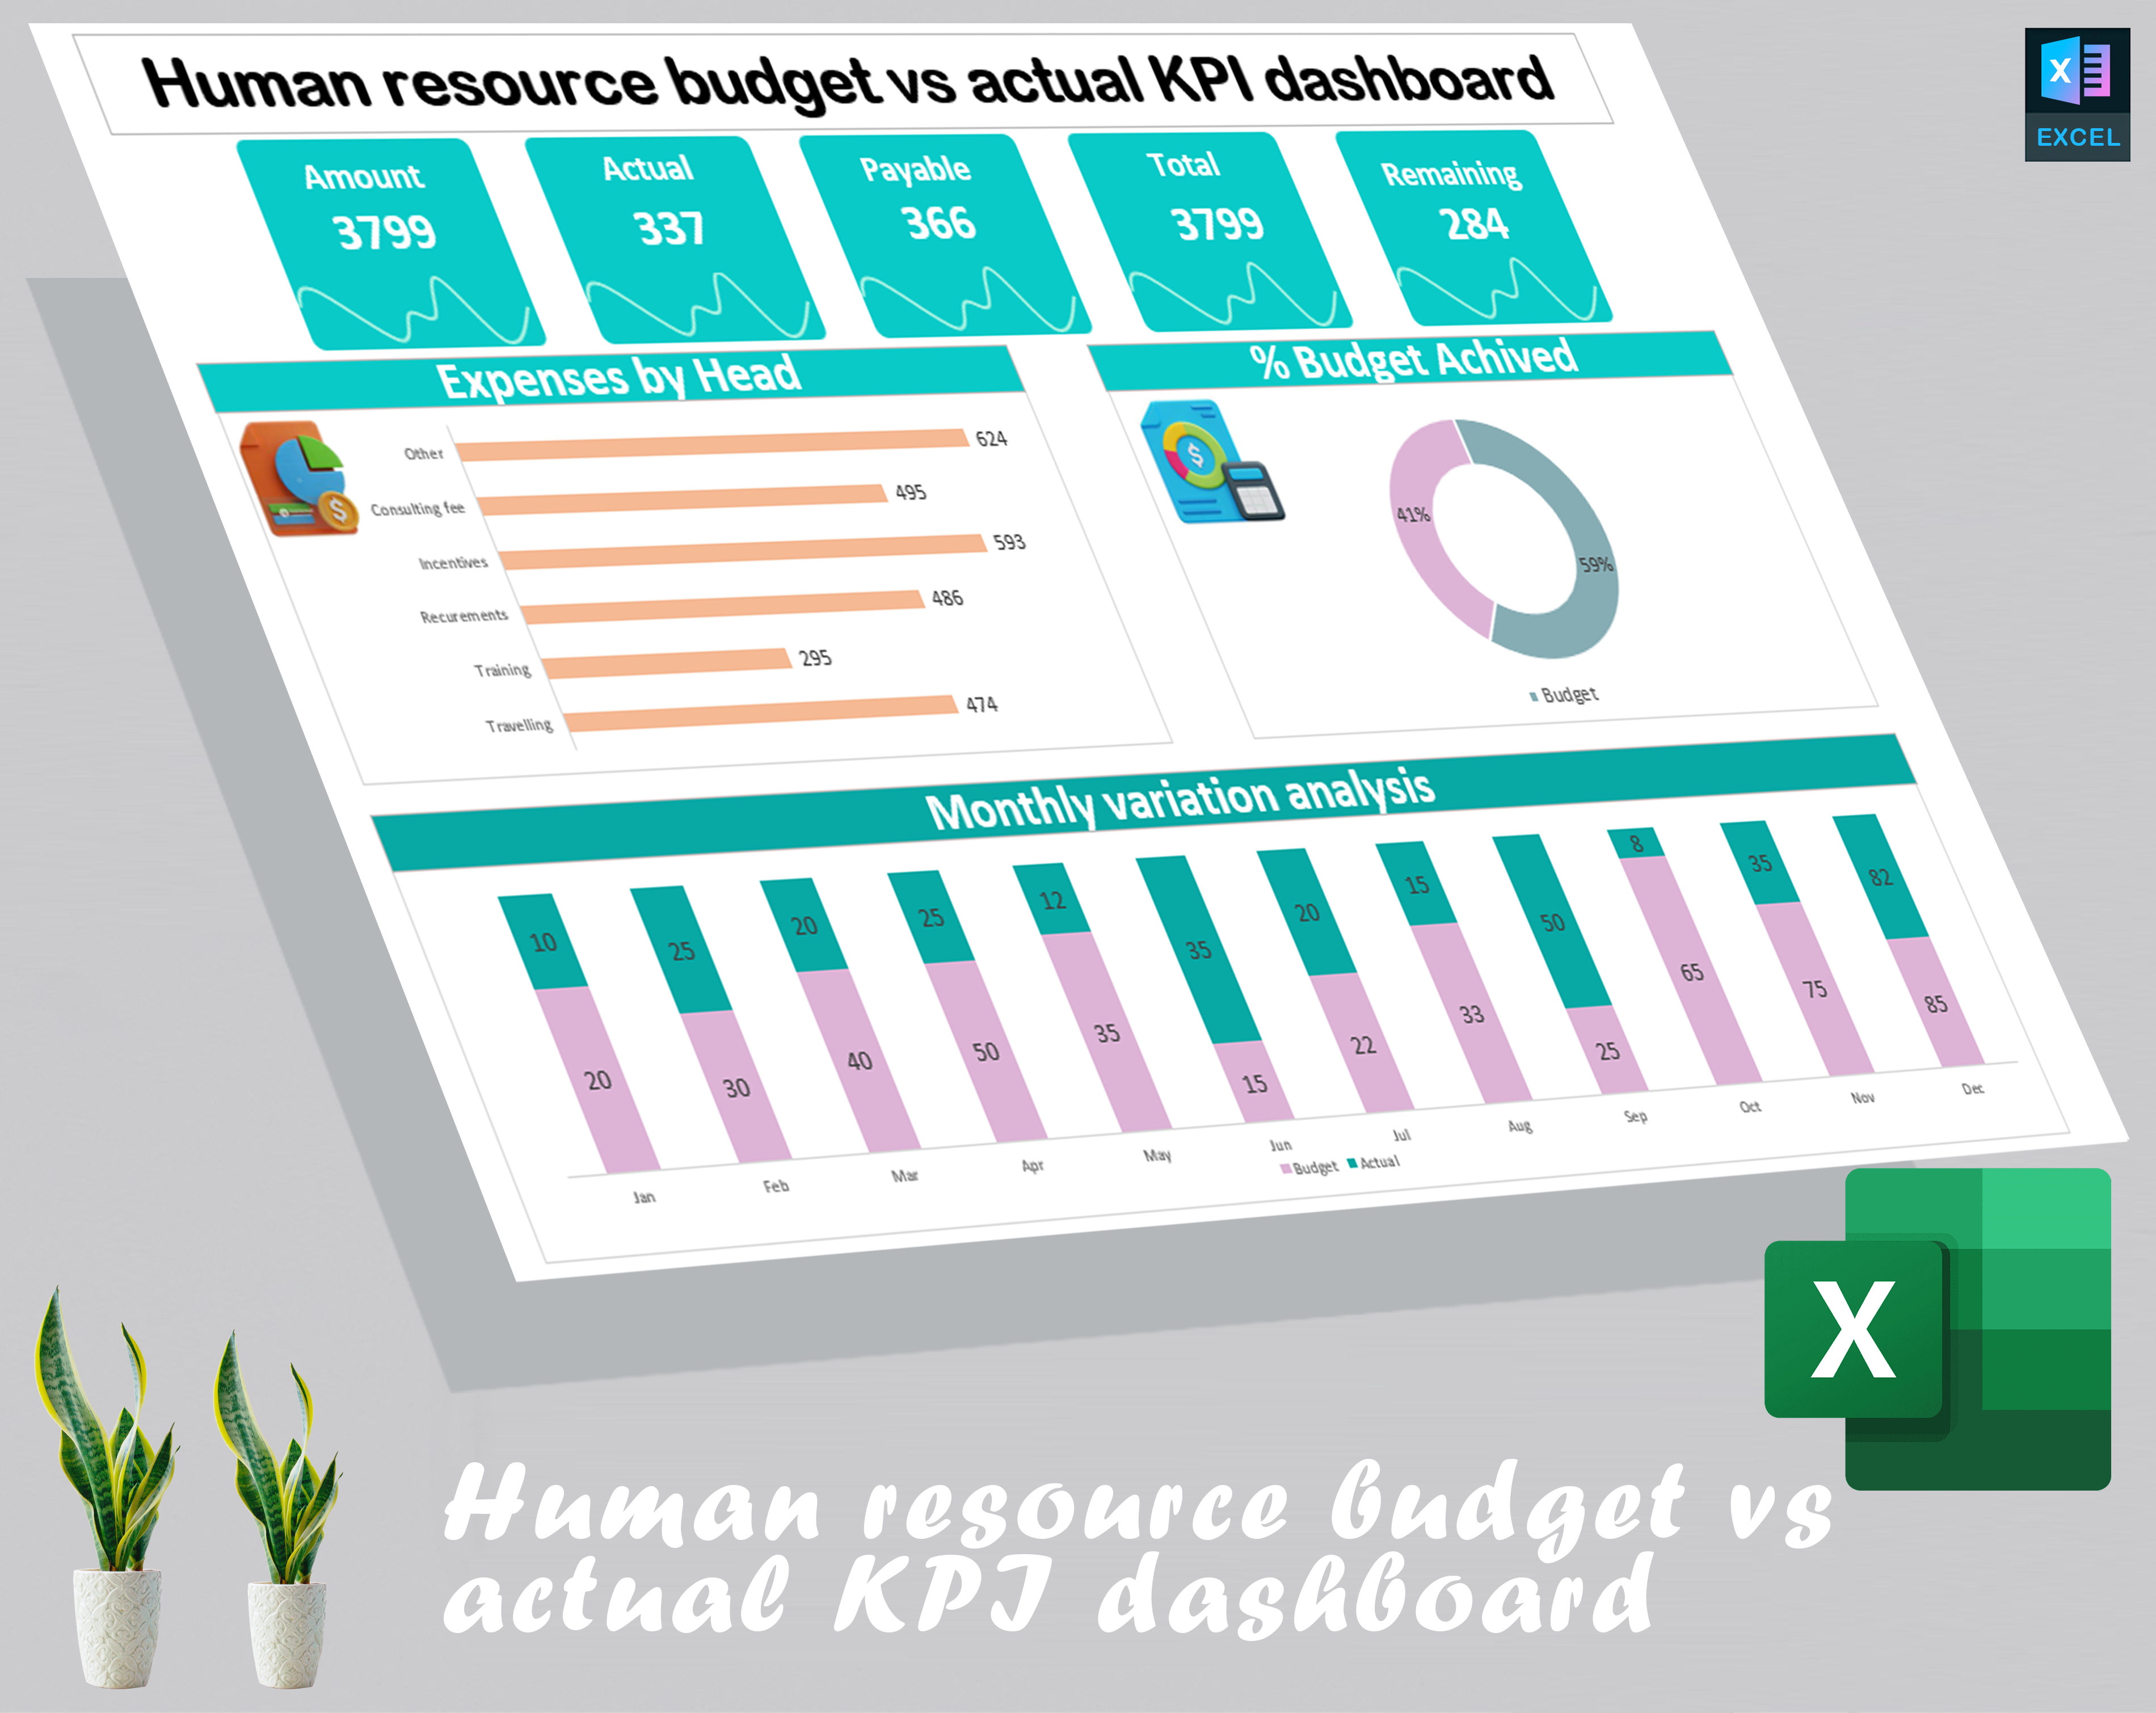 Human resource budget vs actual KPI dashboard